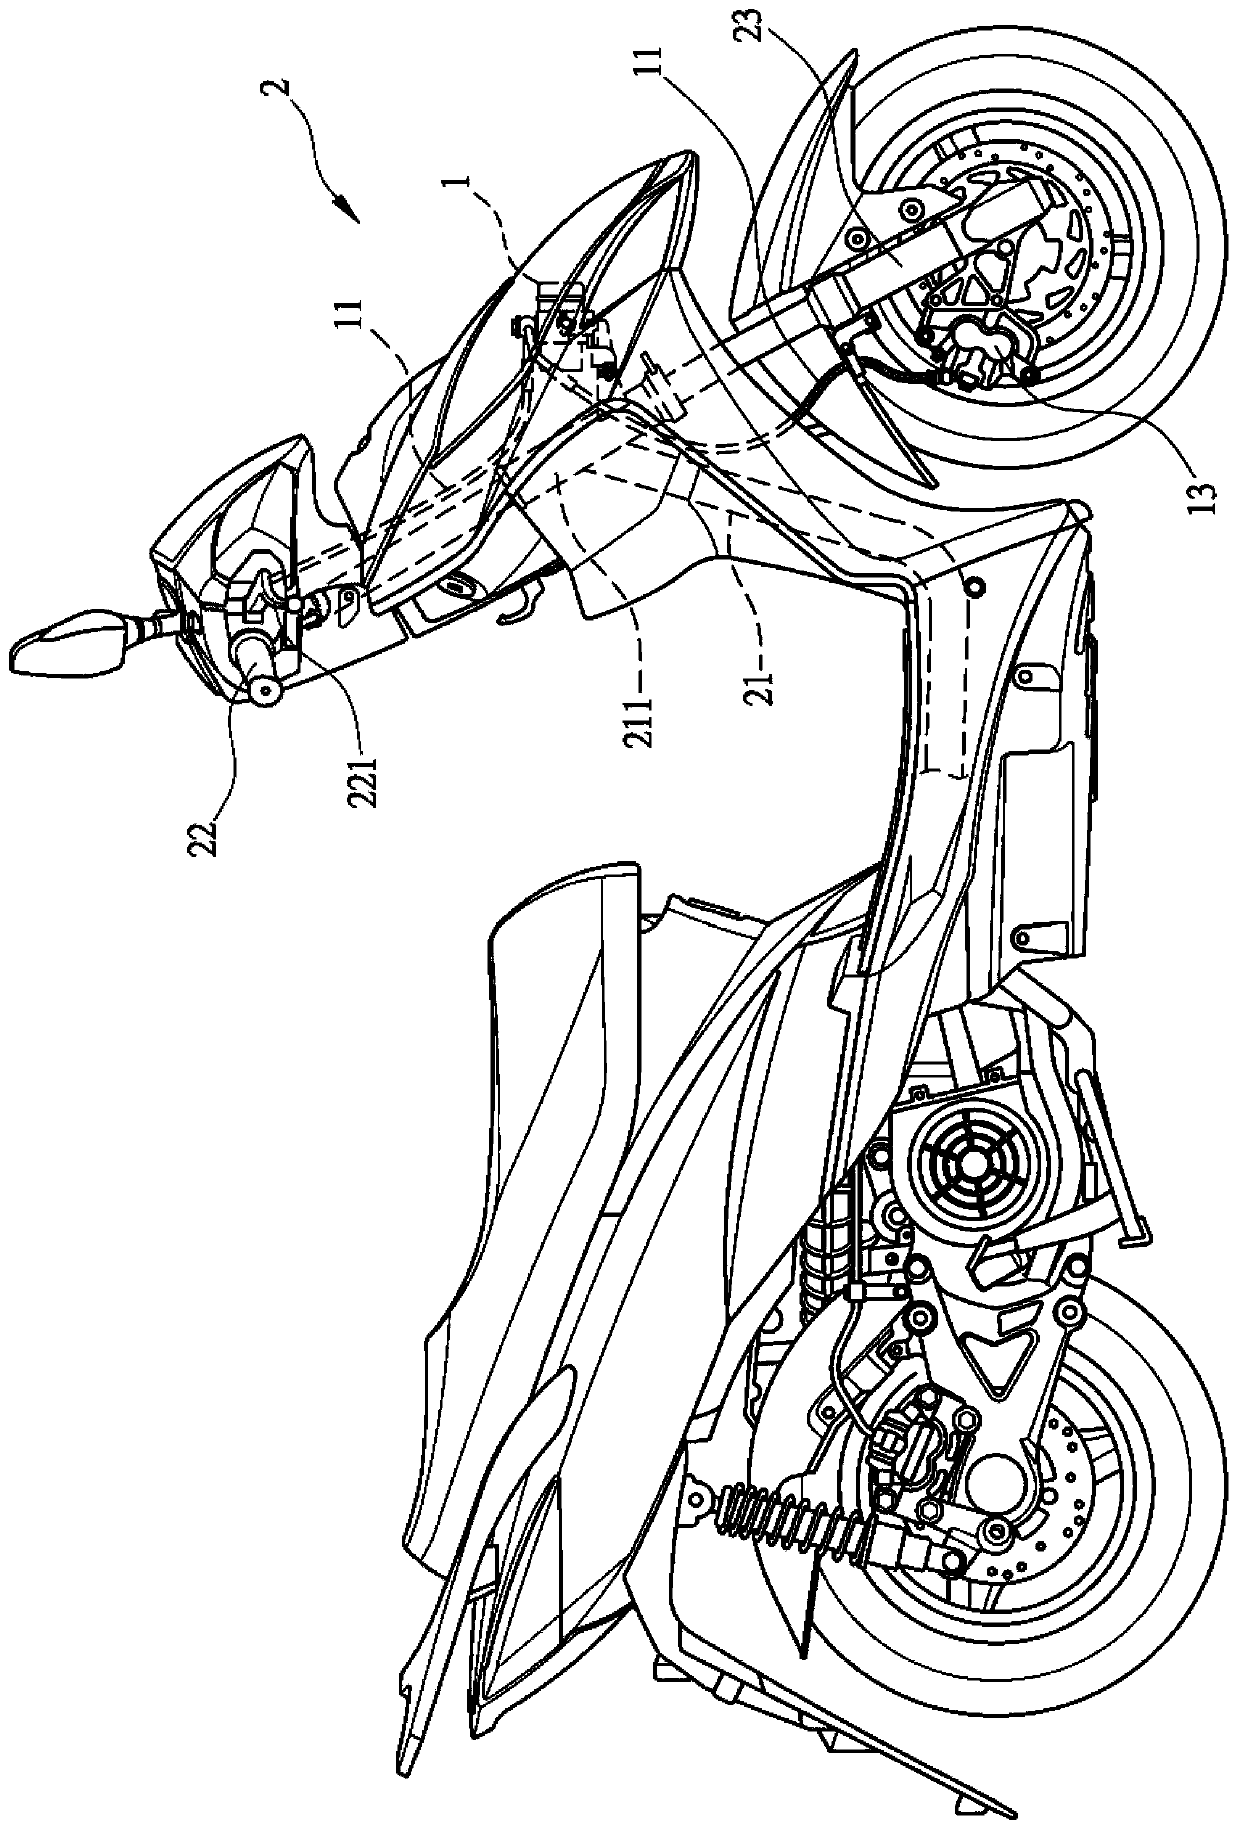 Motorcycle anti-skid brake system structure